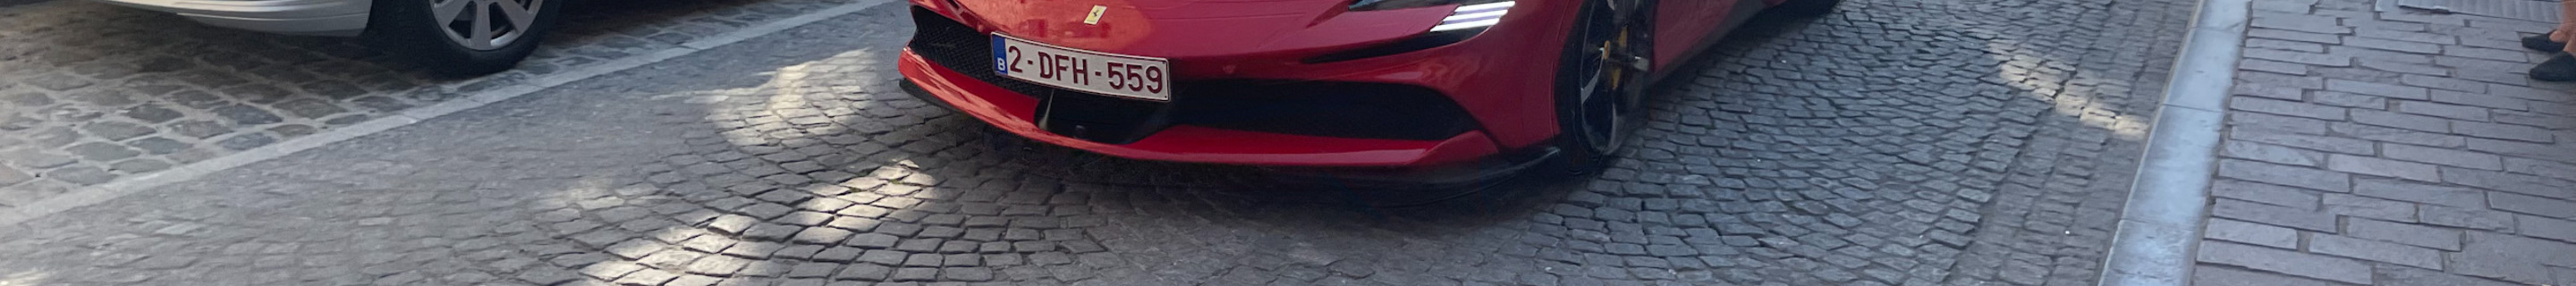 Ferrari SF90 Spider